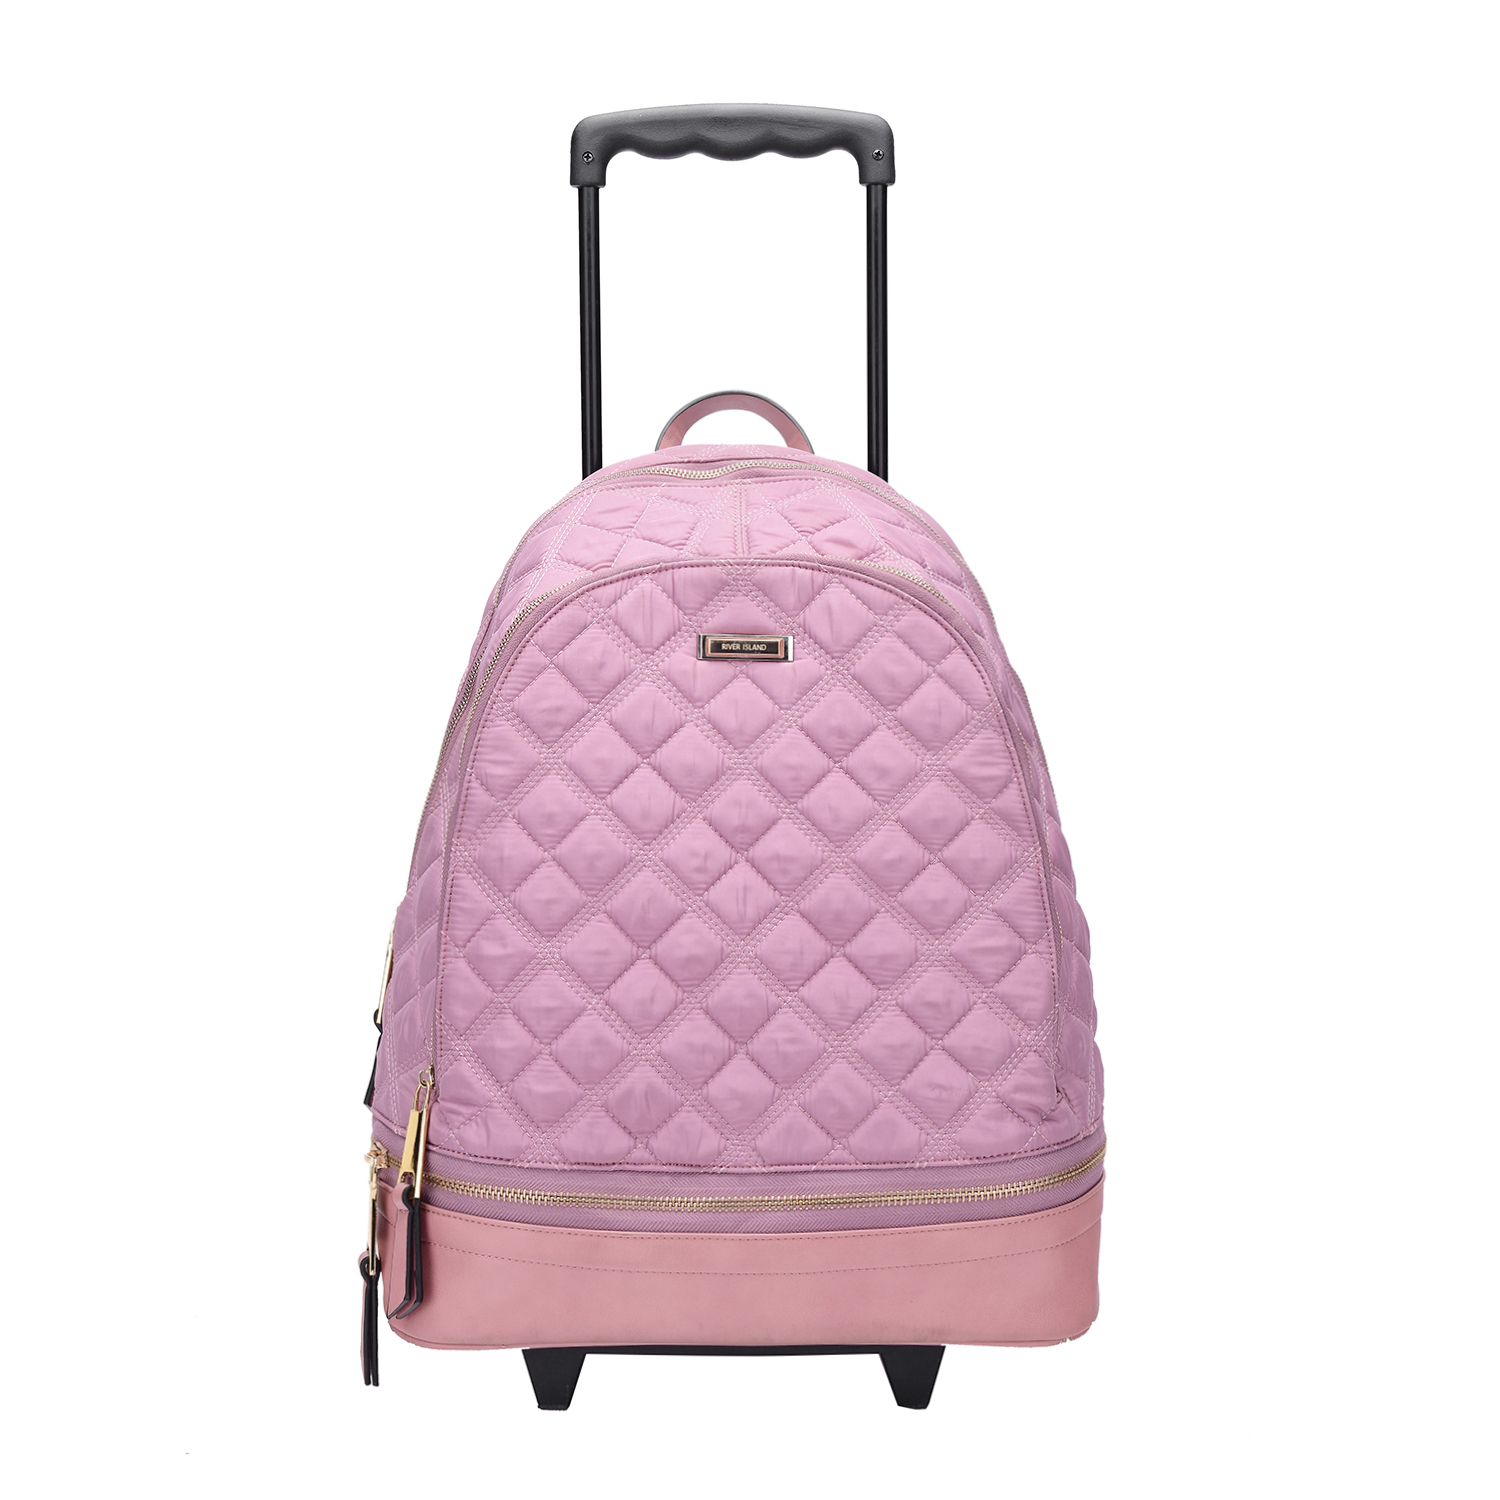 1726-02 trolley pink backpack